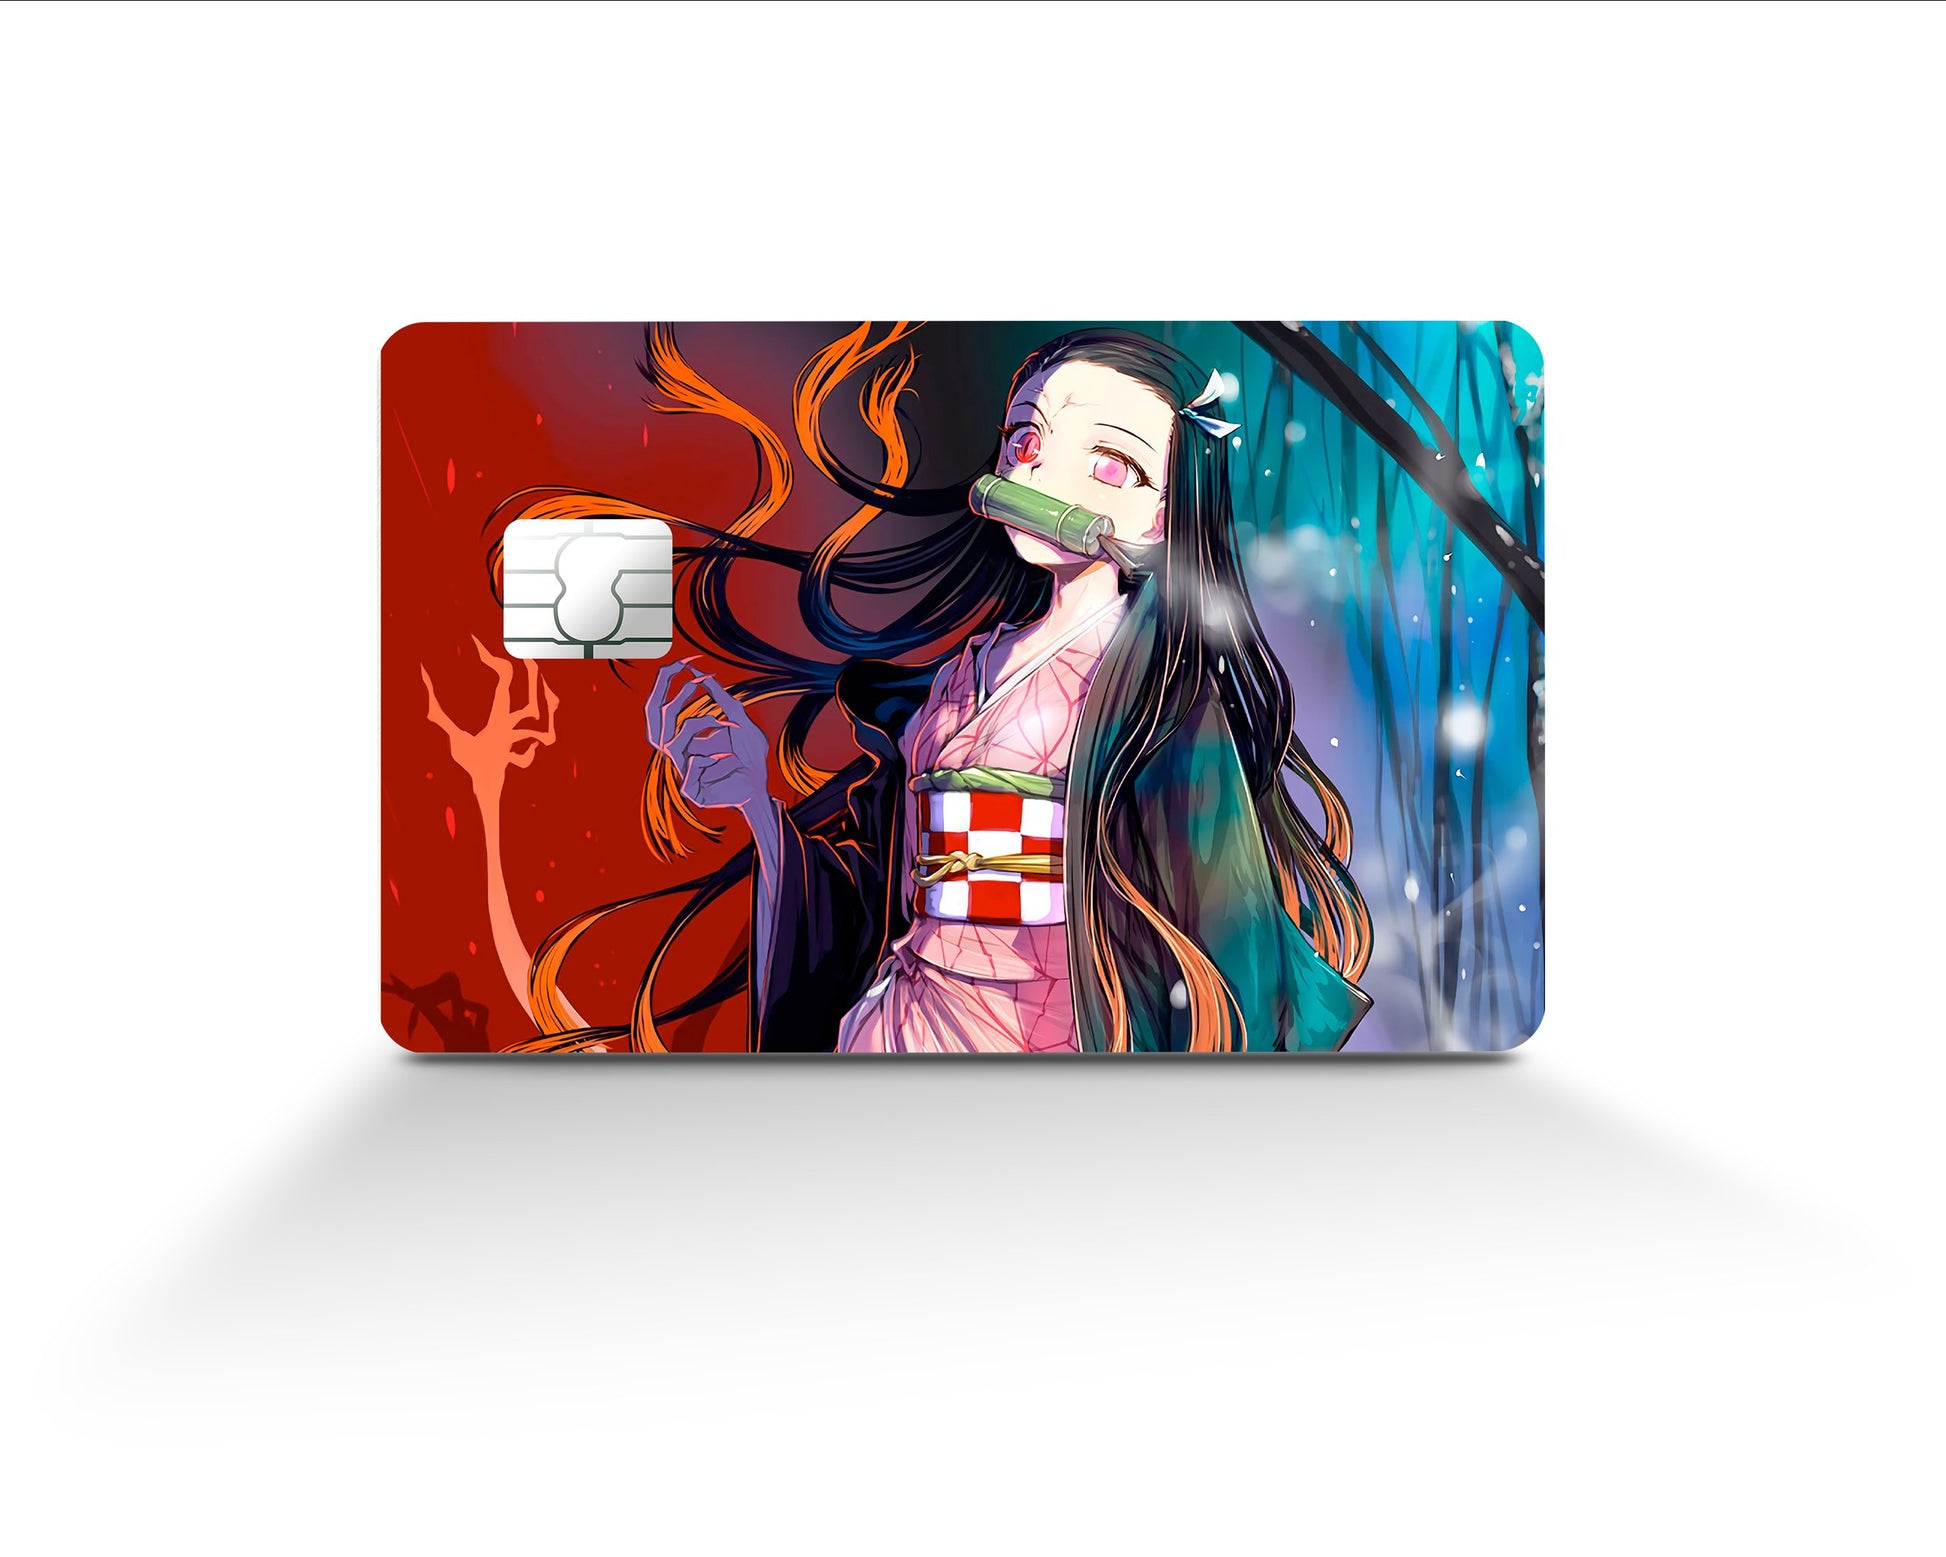 ATM Card Skin